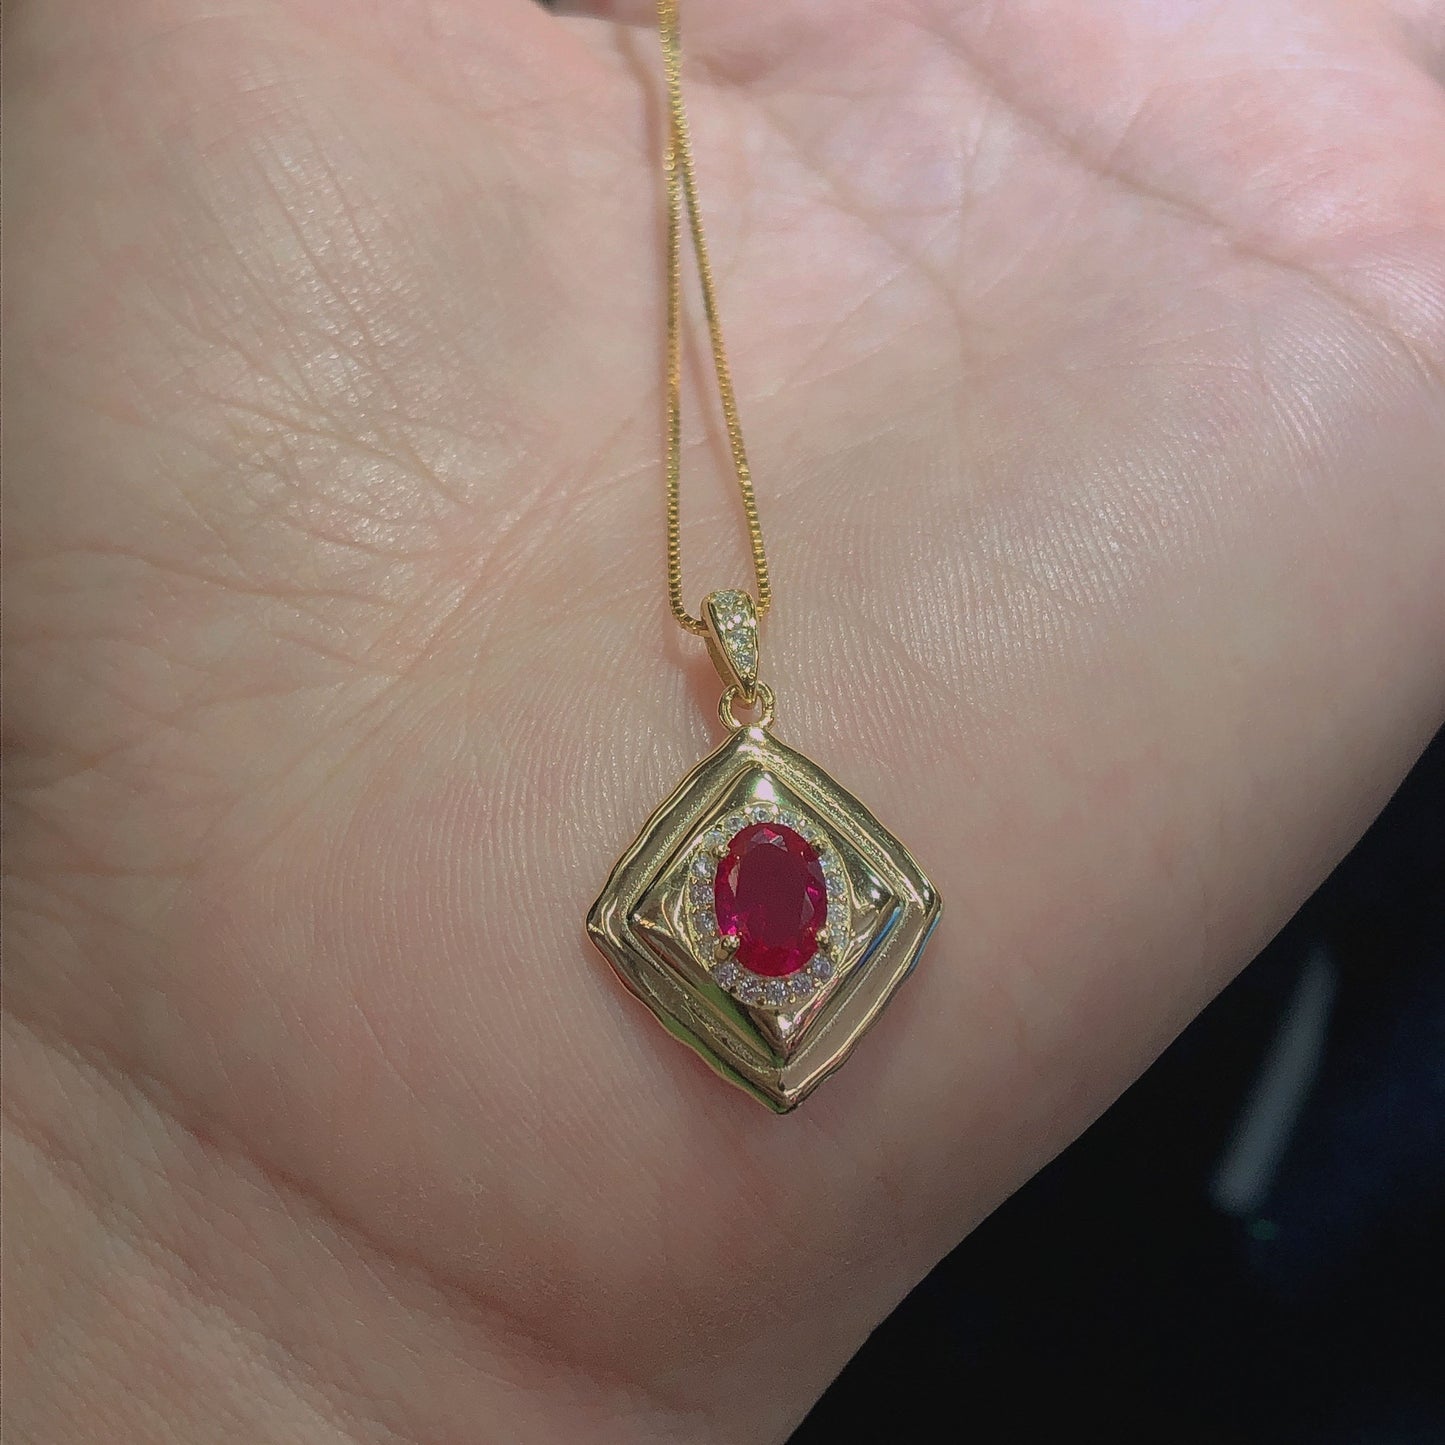 Retro Rhomboid Pendant Women's Necklace with Gift Box